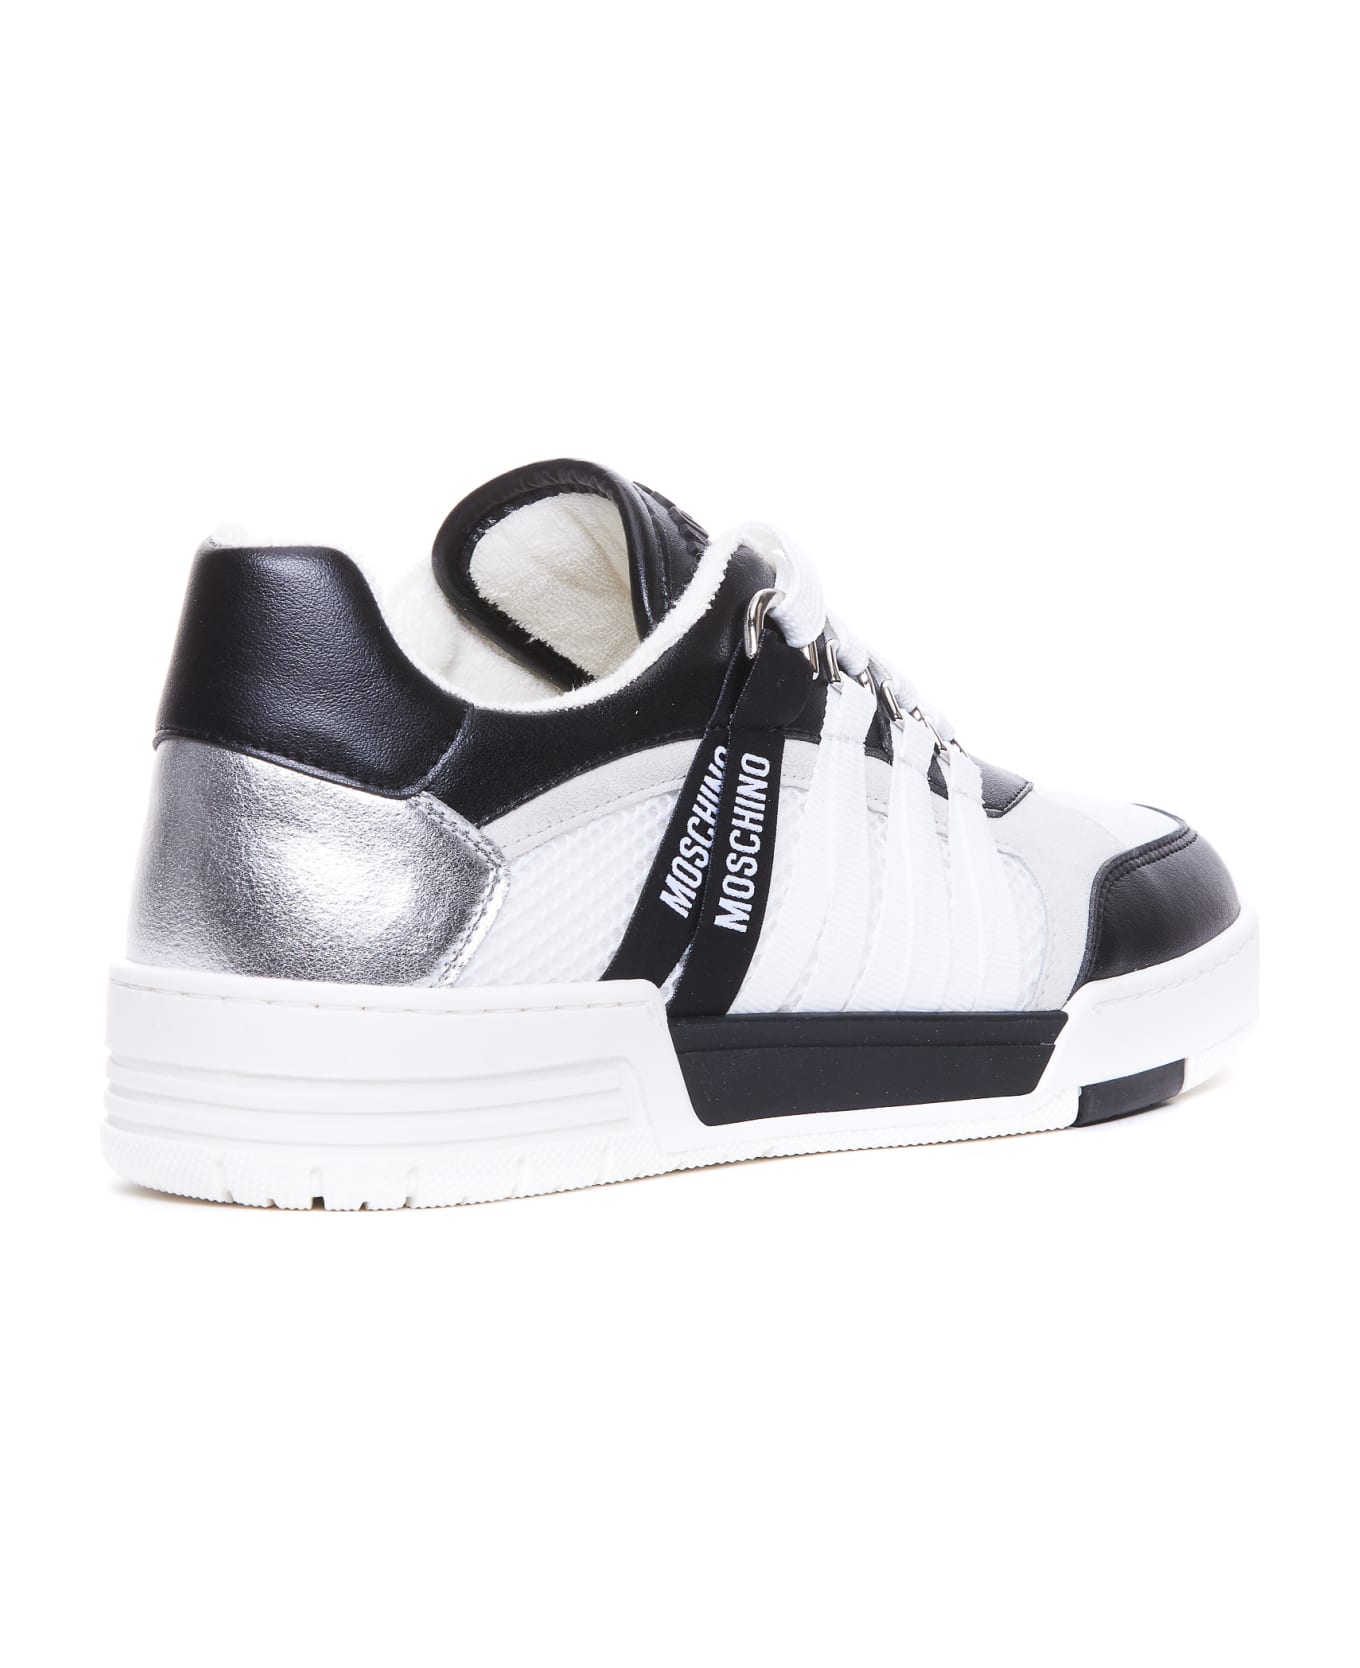 Moschino Streetball Sneakers - White